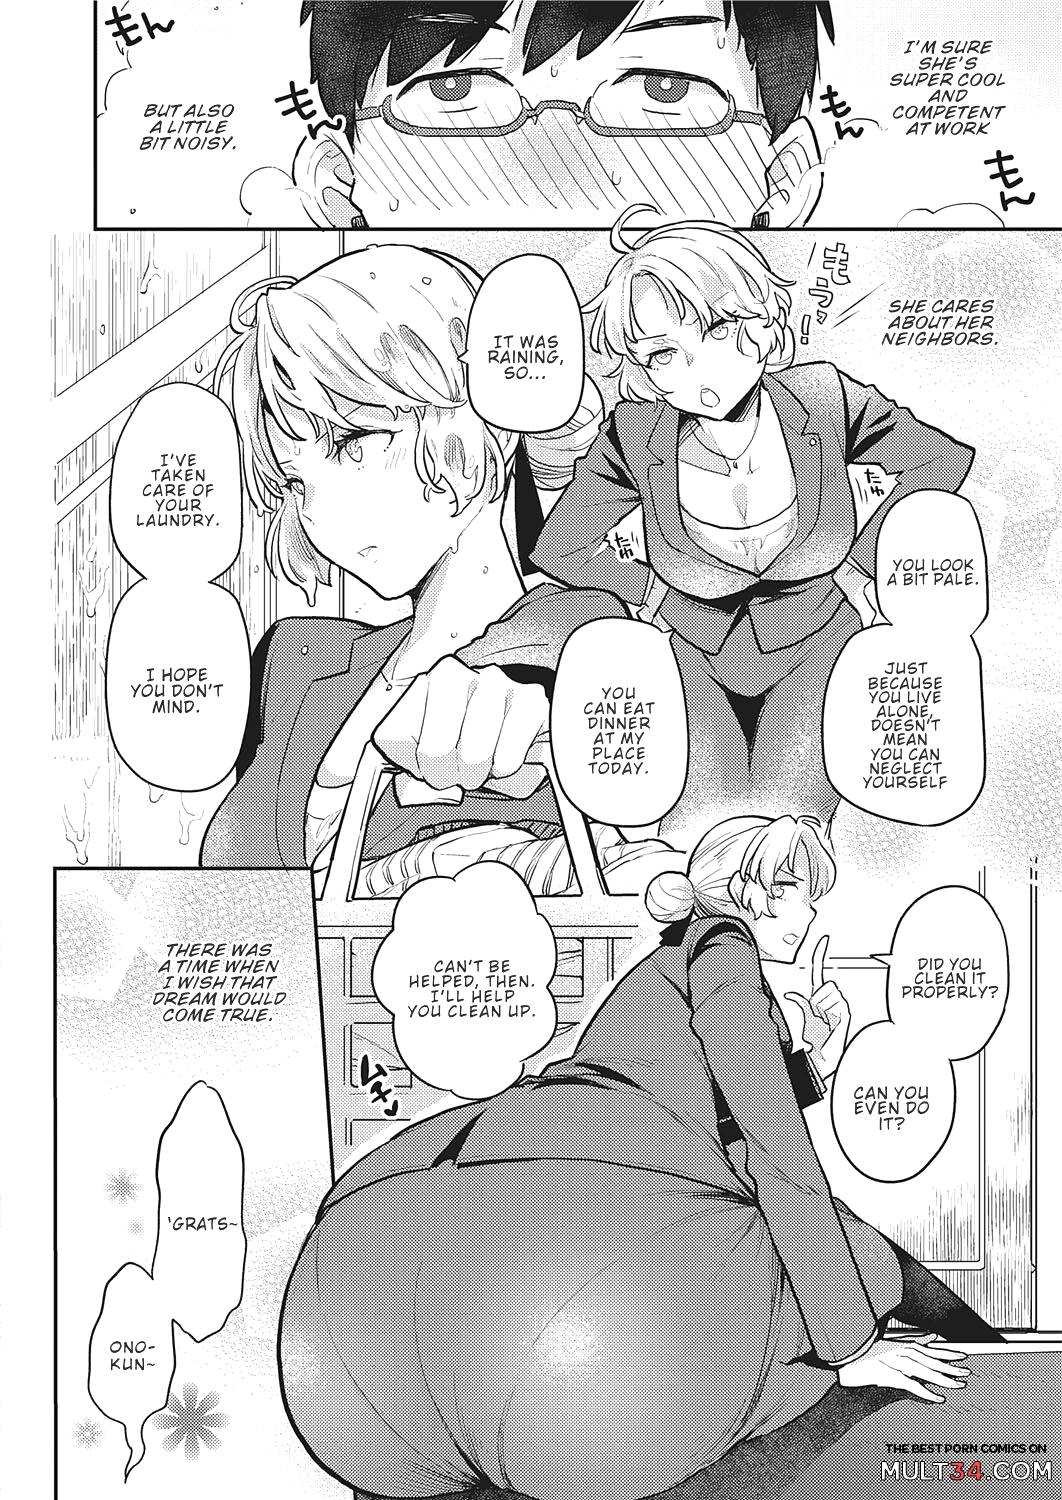 OL-san Next Door page 2